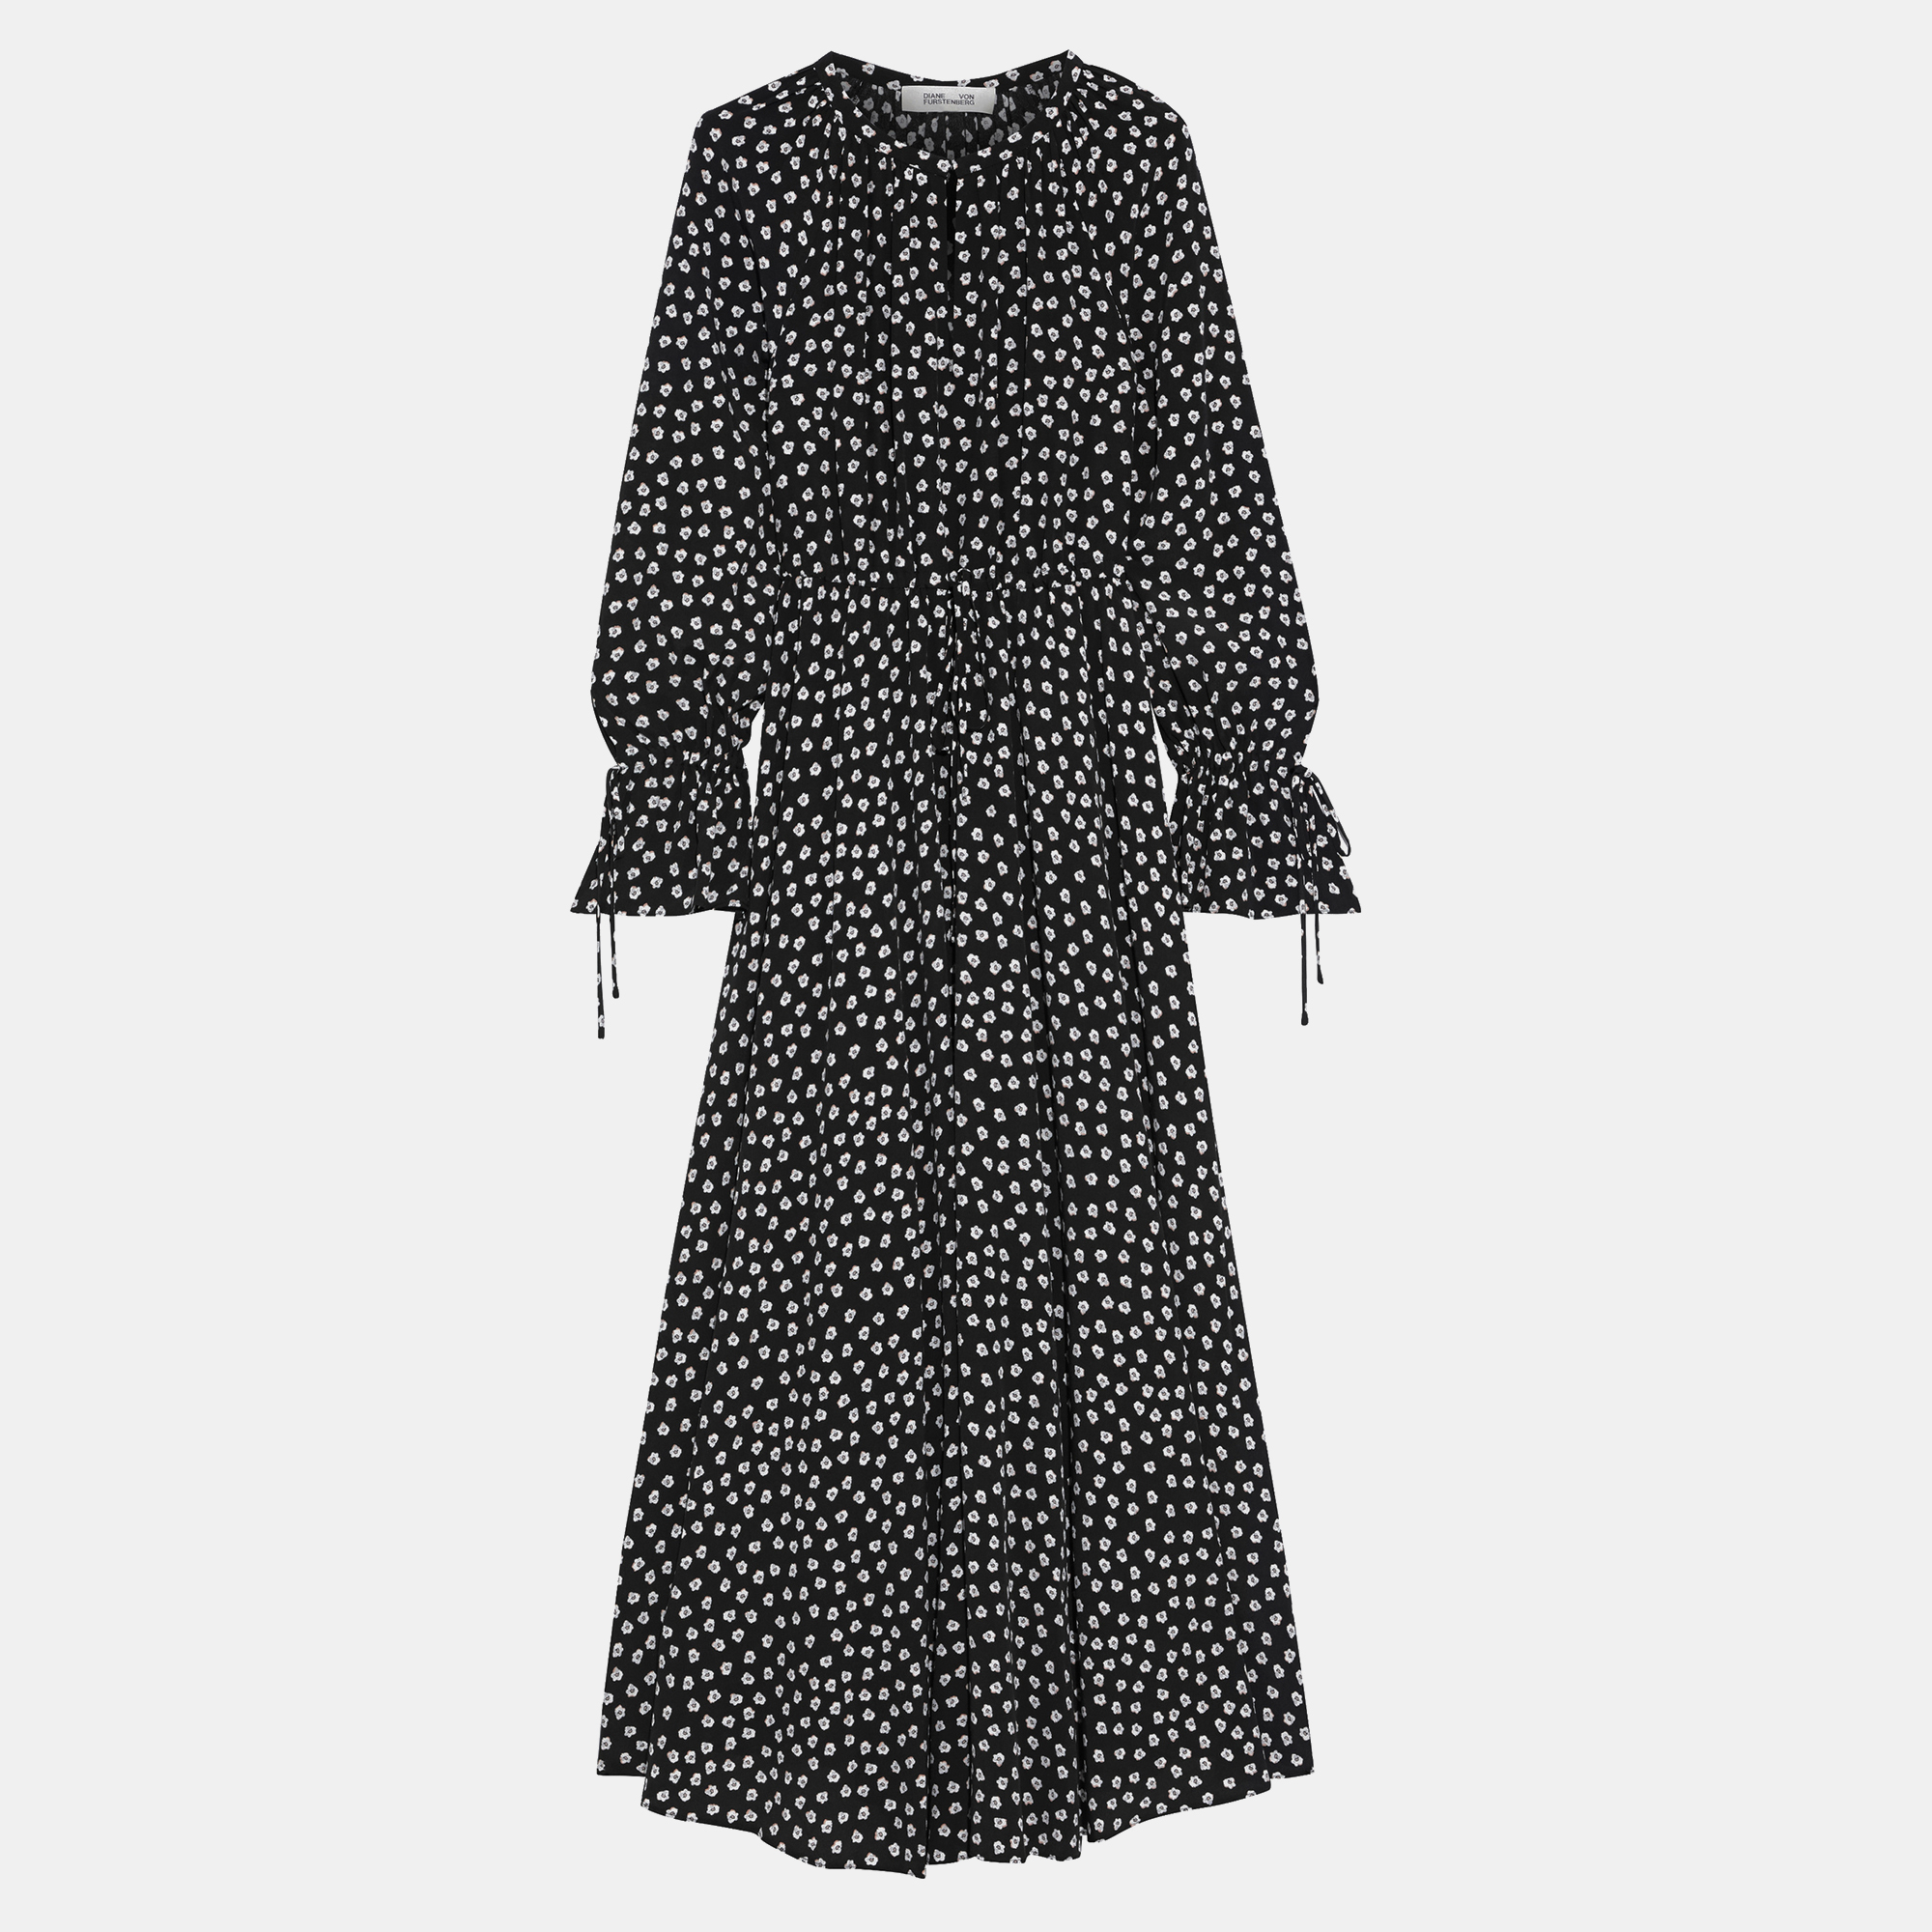 Diane von furstenberg black floral print viscose maxi dress l